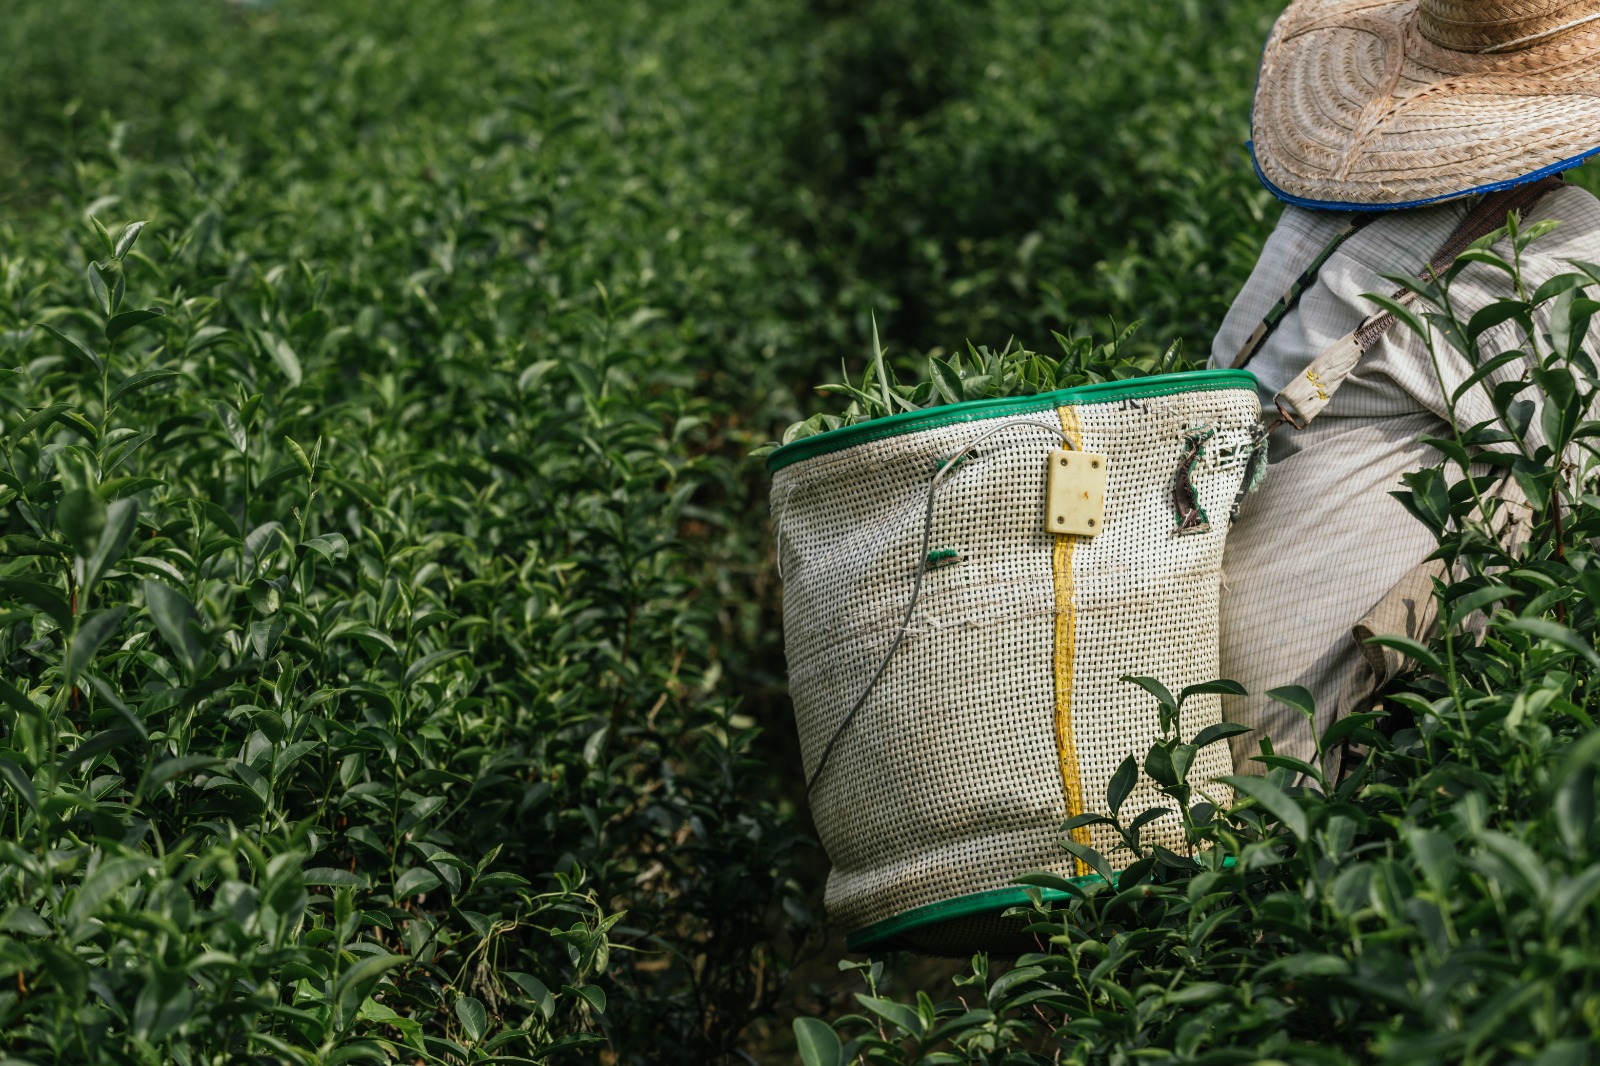 Grow Bags / Planter Bags Manufacturer - GreenPro Ventures